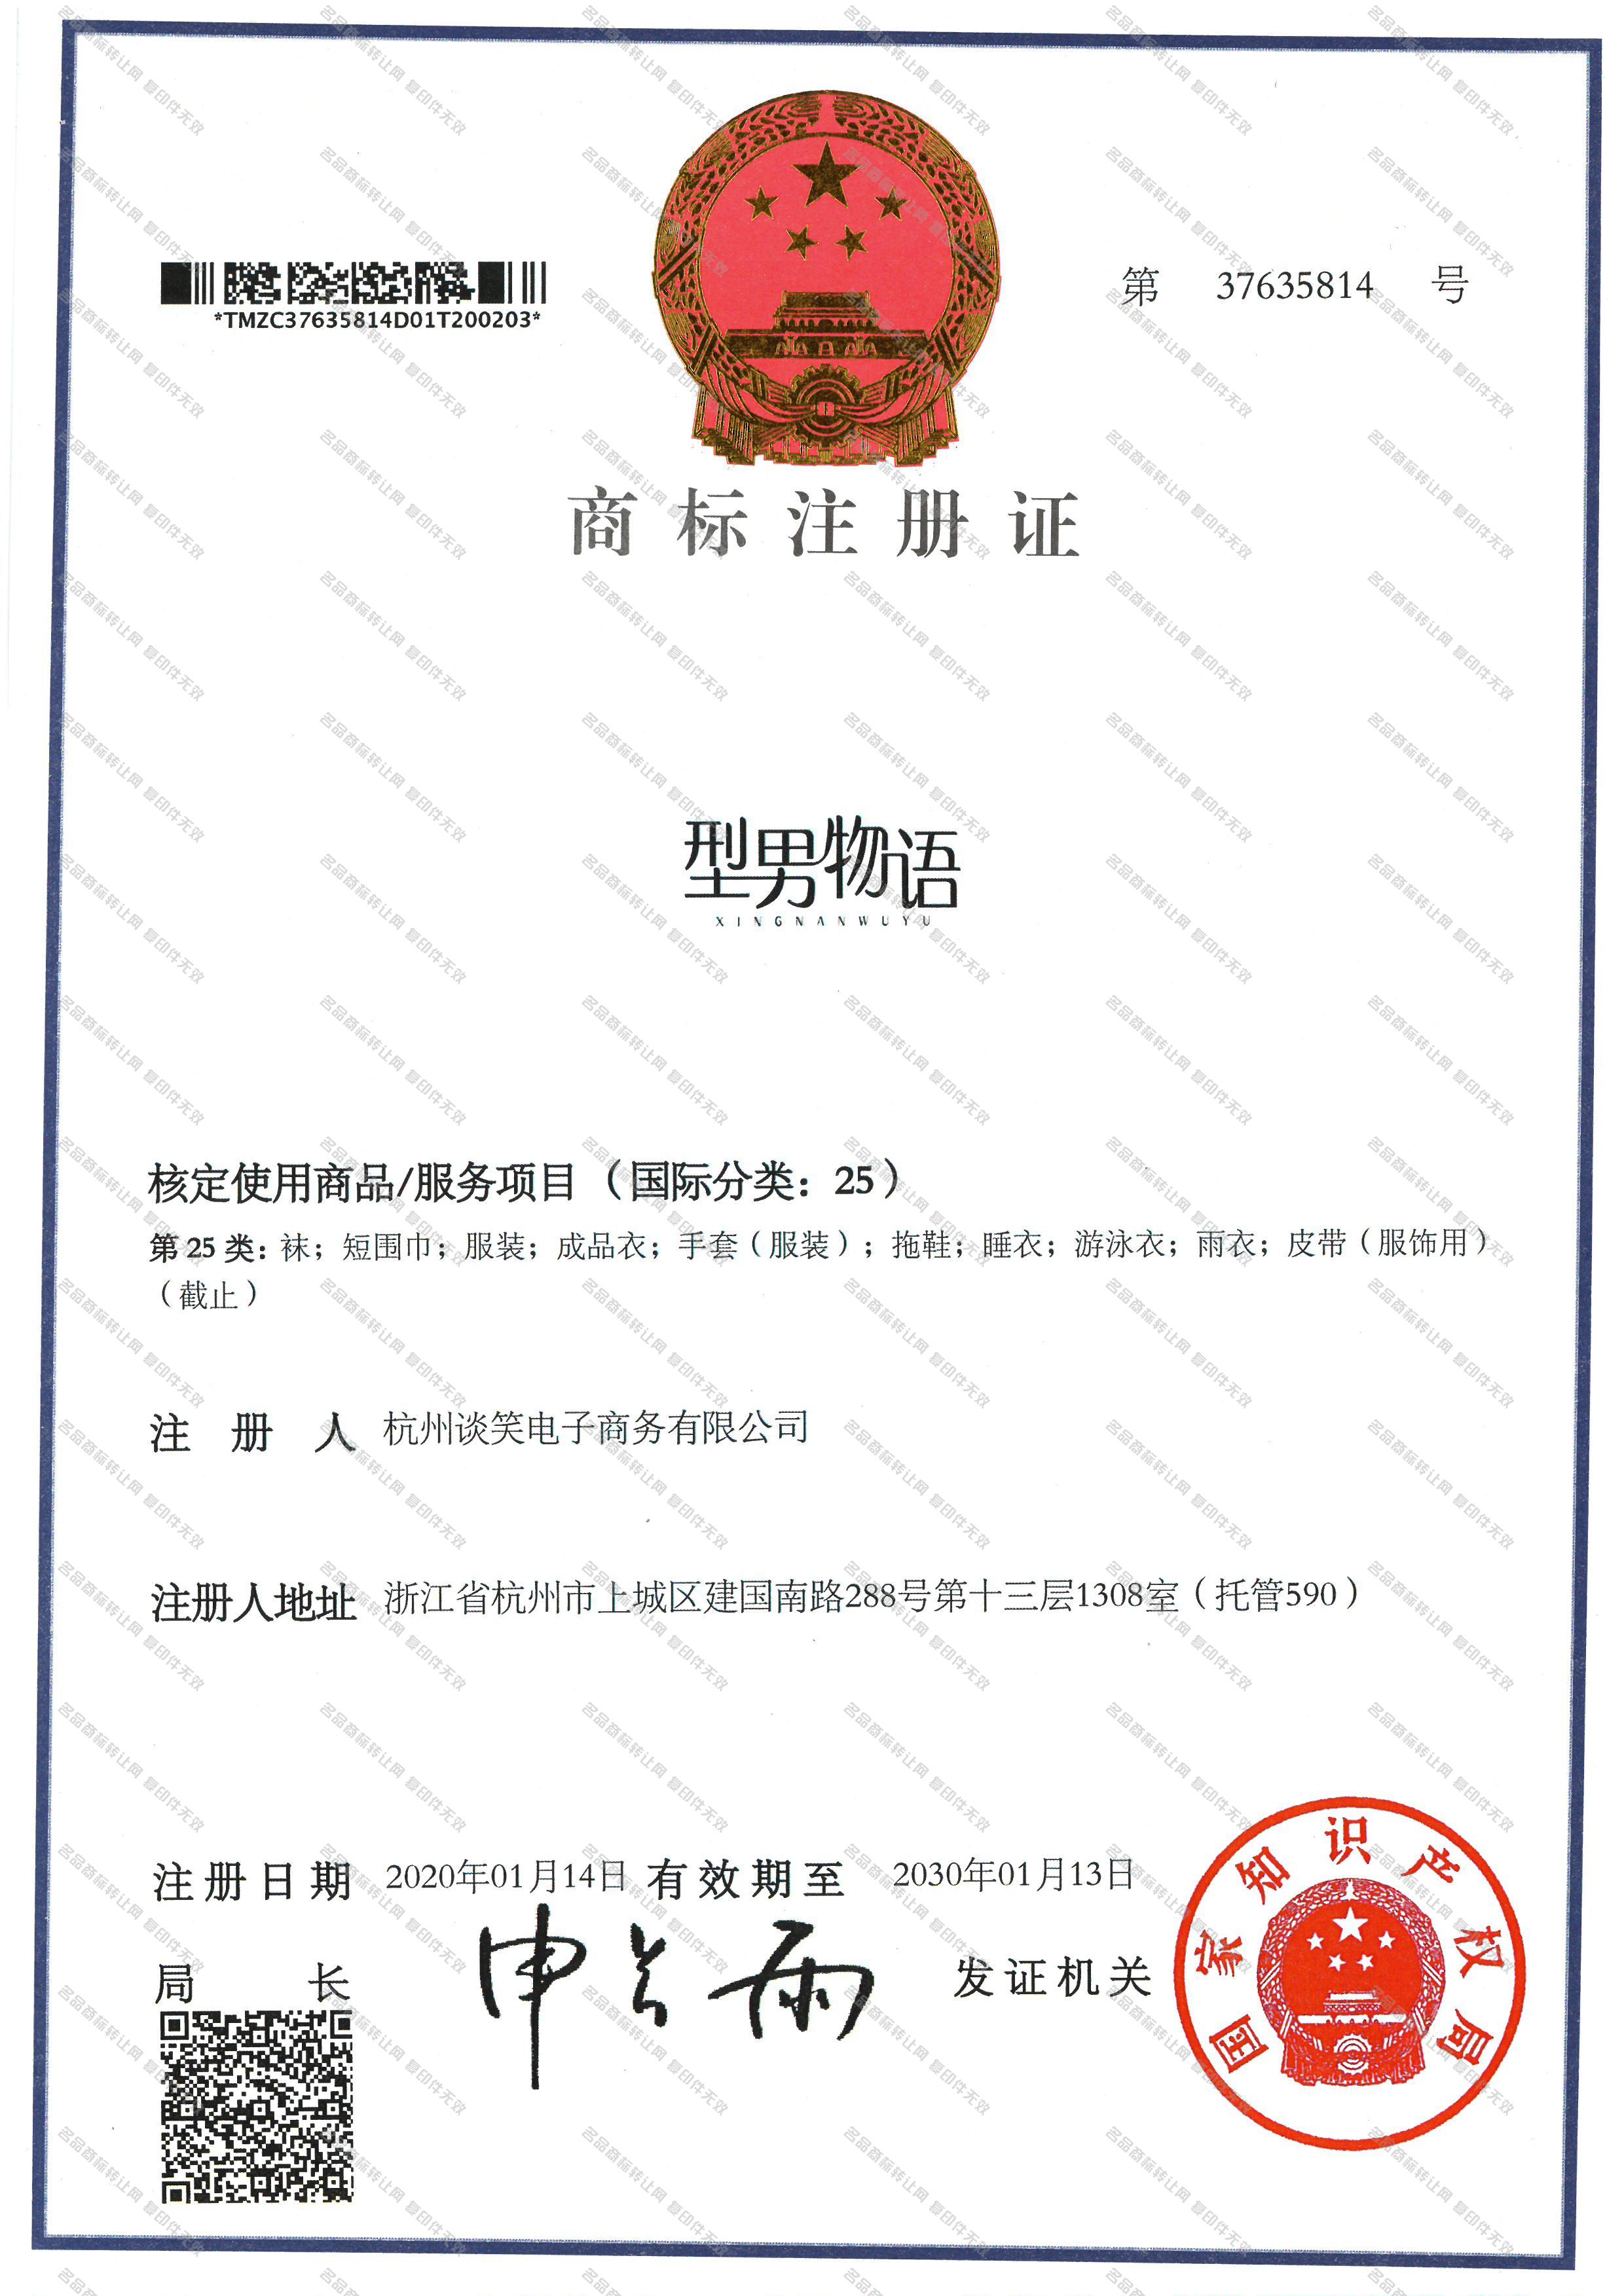 型男物语 XINGNANWUYU注册证